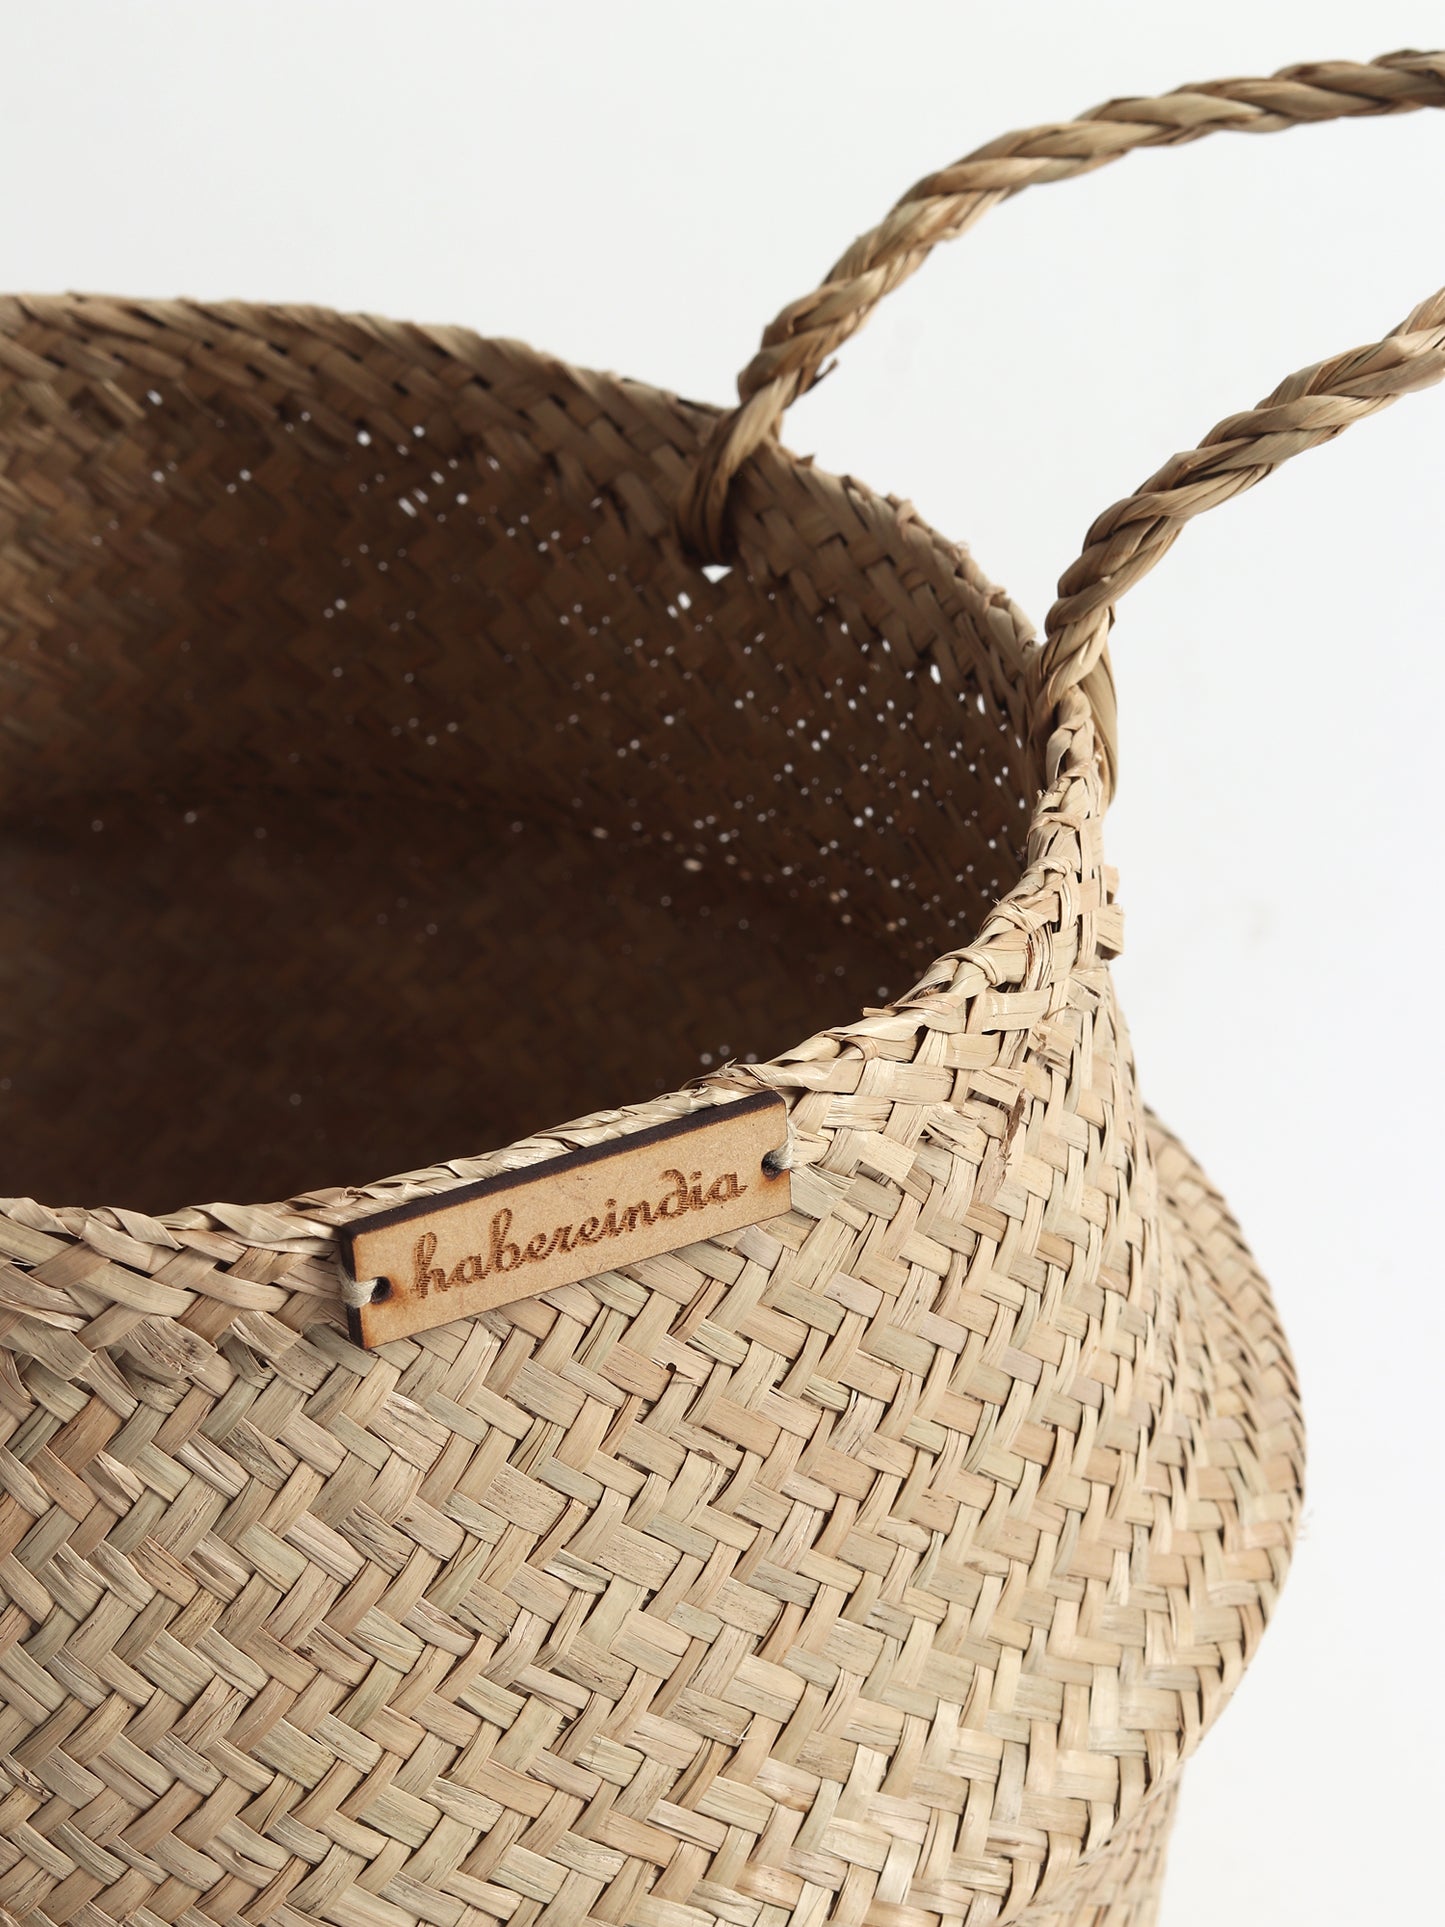 Buy Seagrass Plant & Storage Baskets